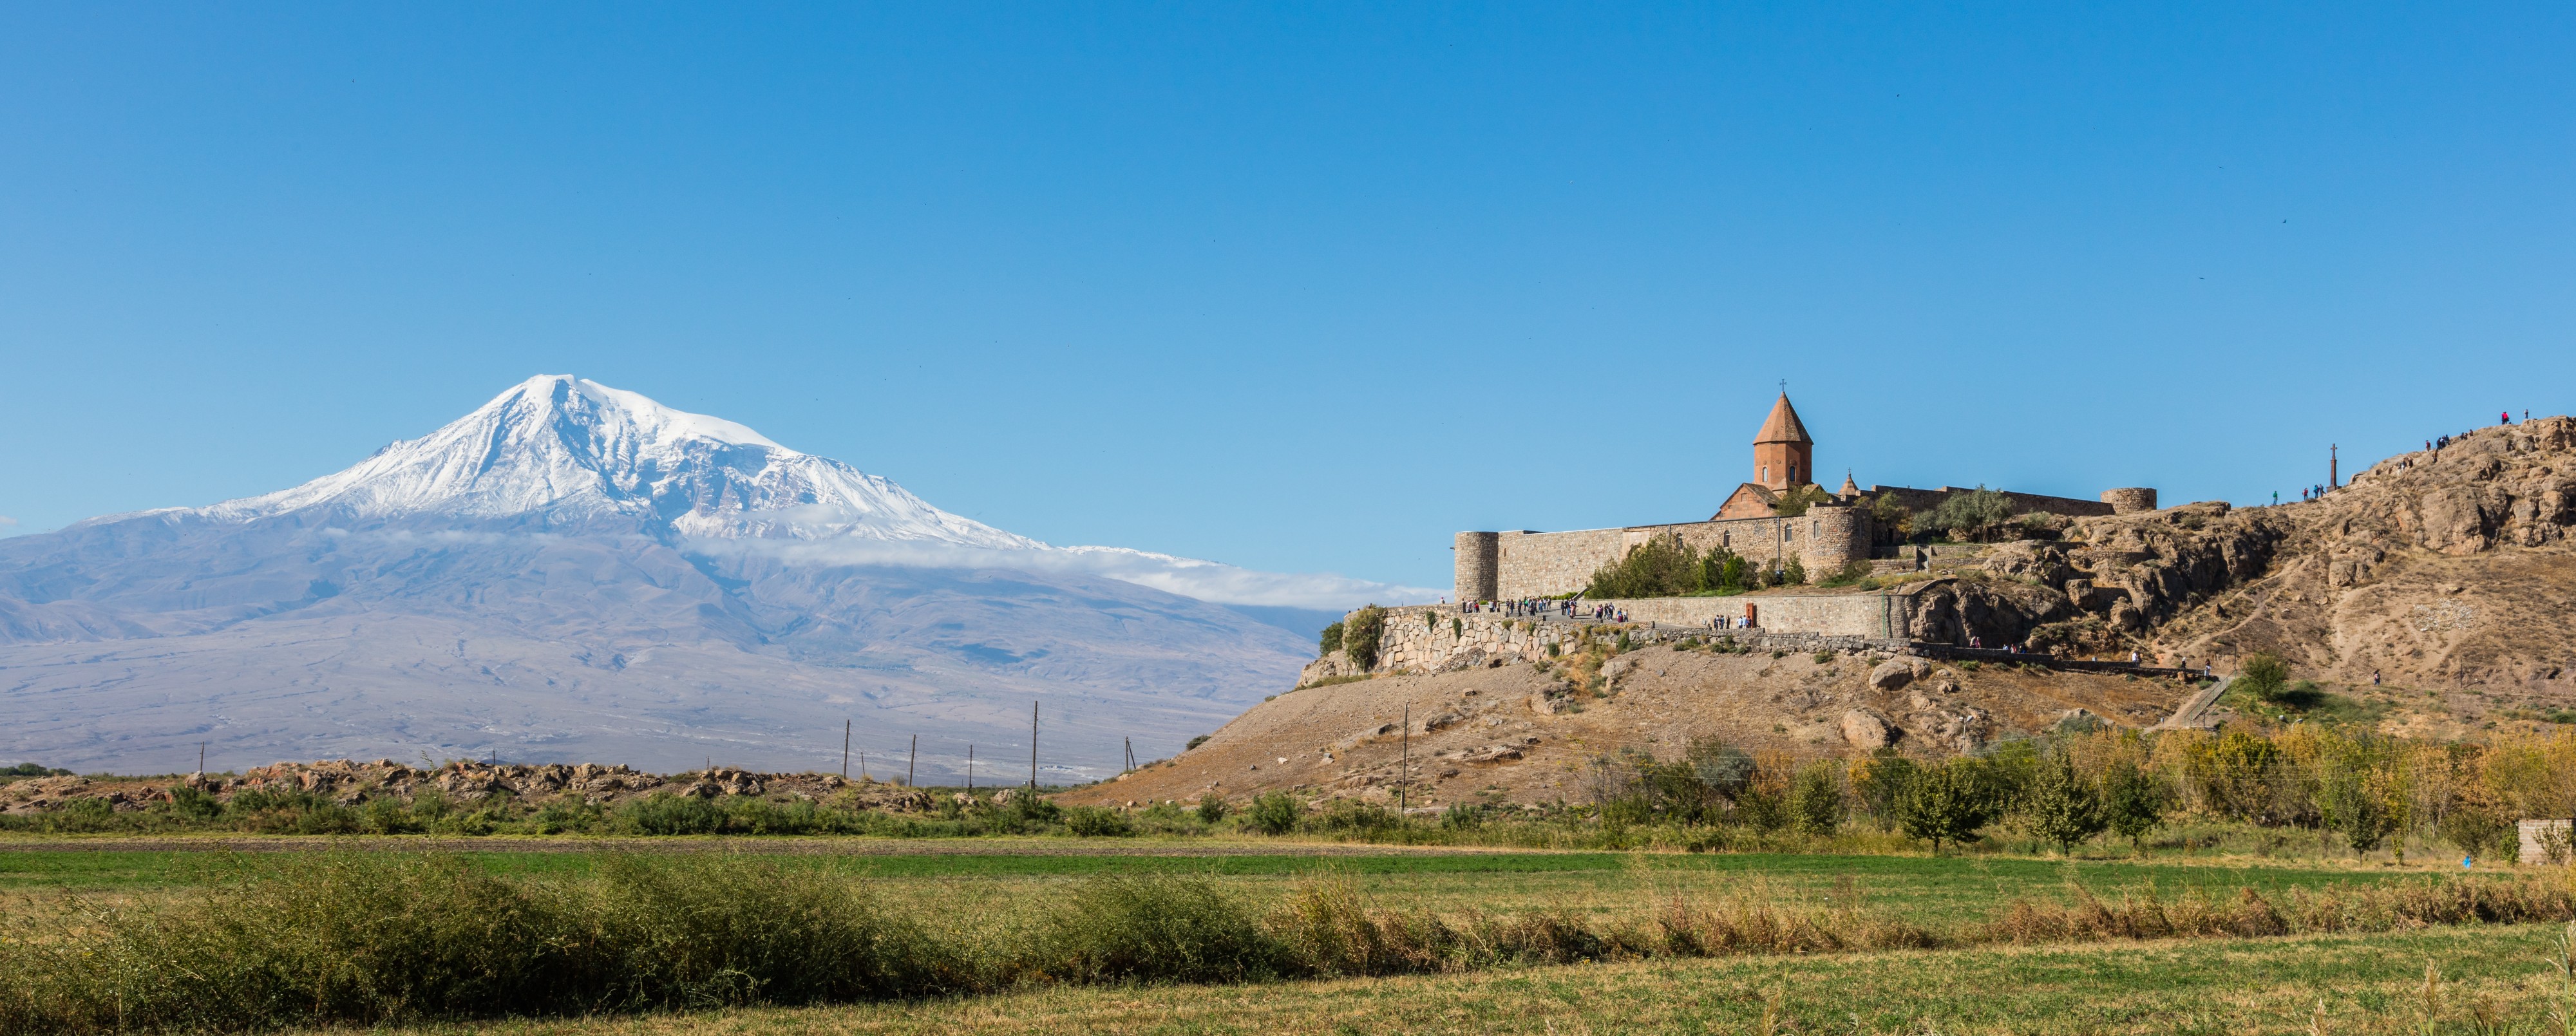 Monasterio Khor Virap, Armenia, 2016-10-01, DD 24